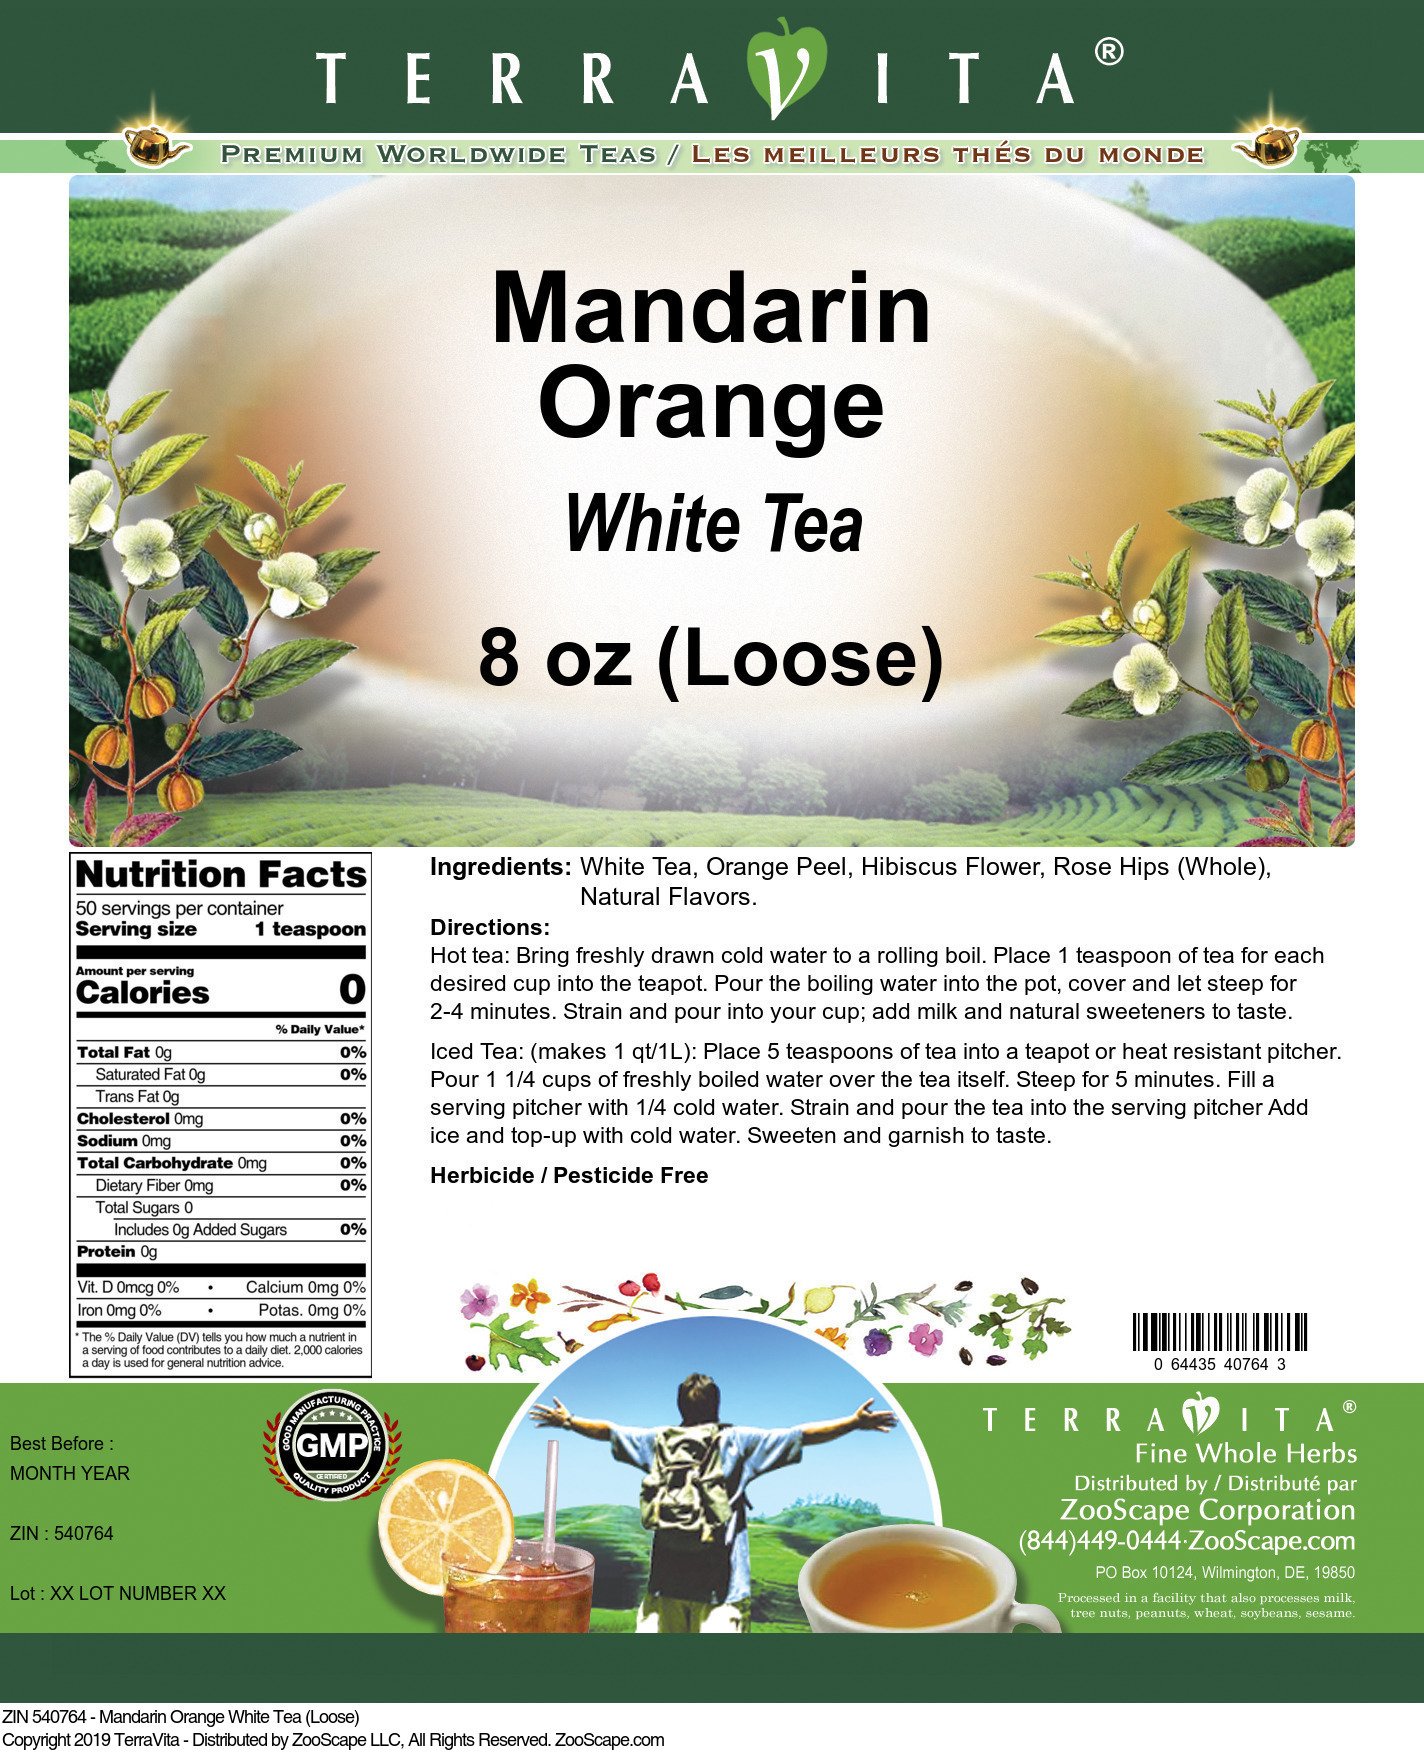 Mandarin Orange White Tea (Loose) - Label